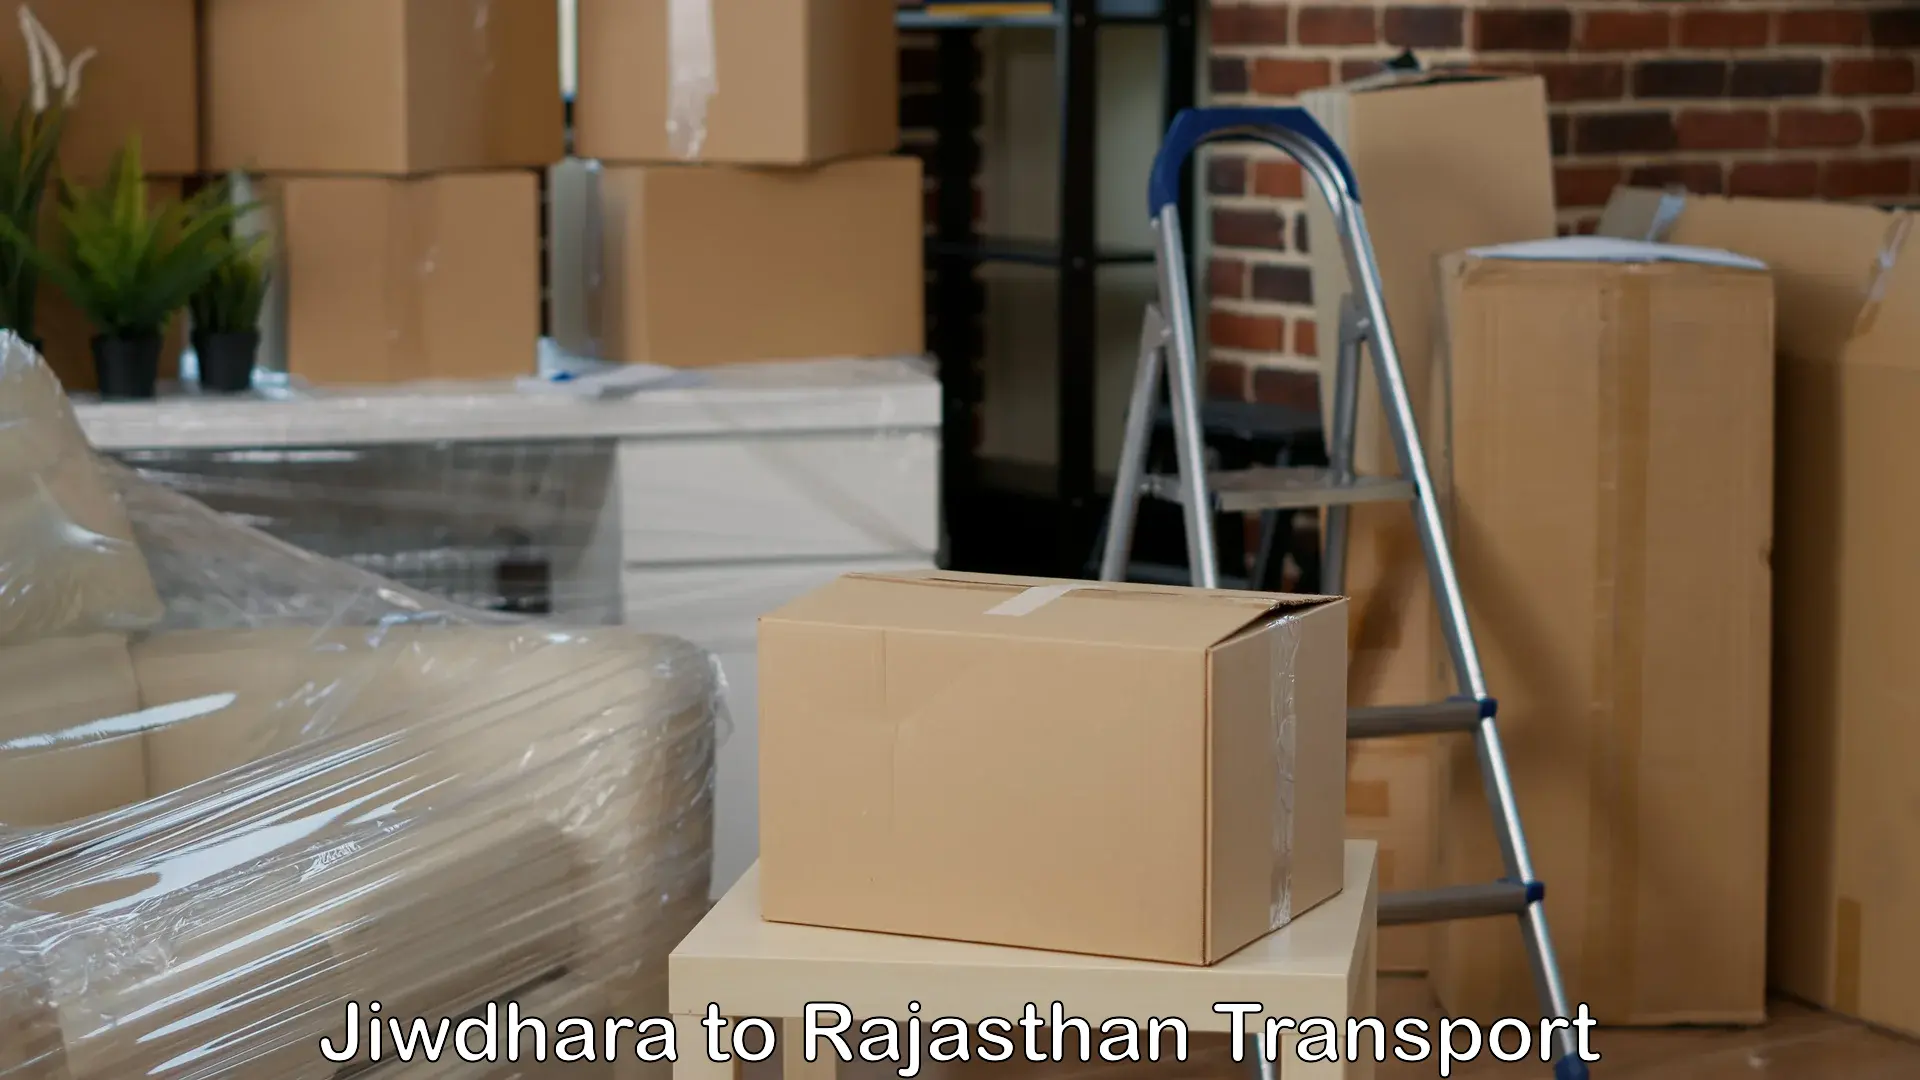 Shipping partner Jiwdhara to Kishangarh